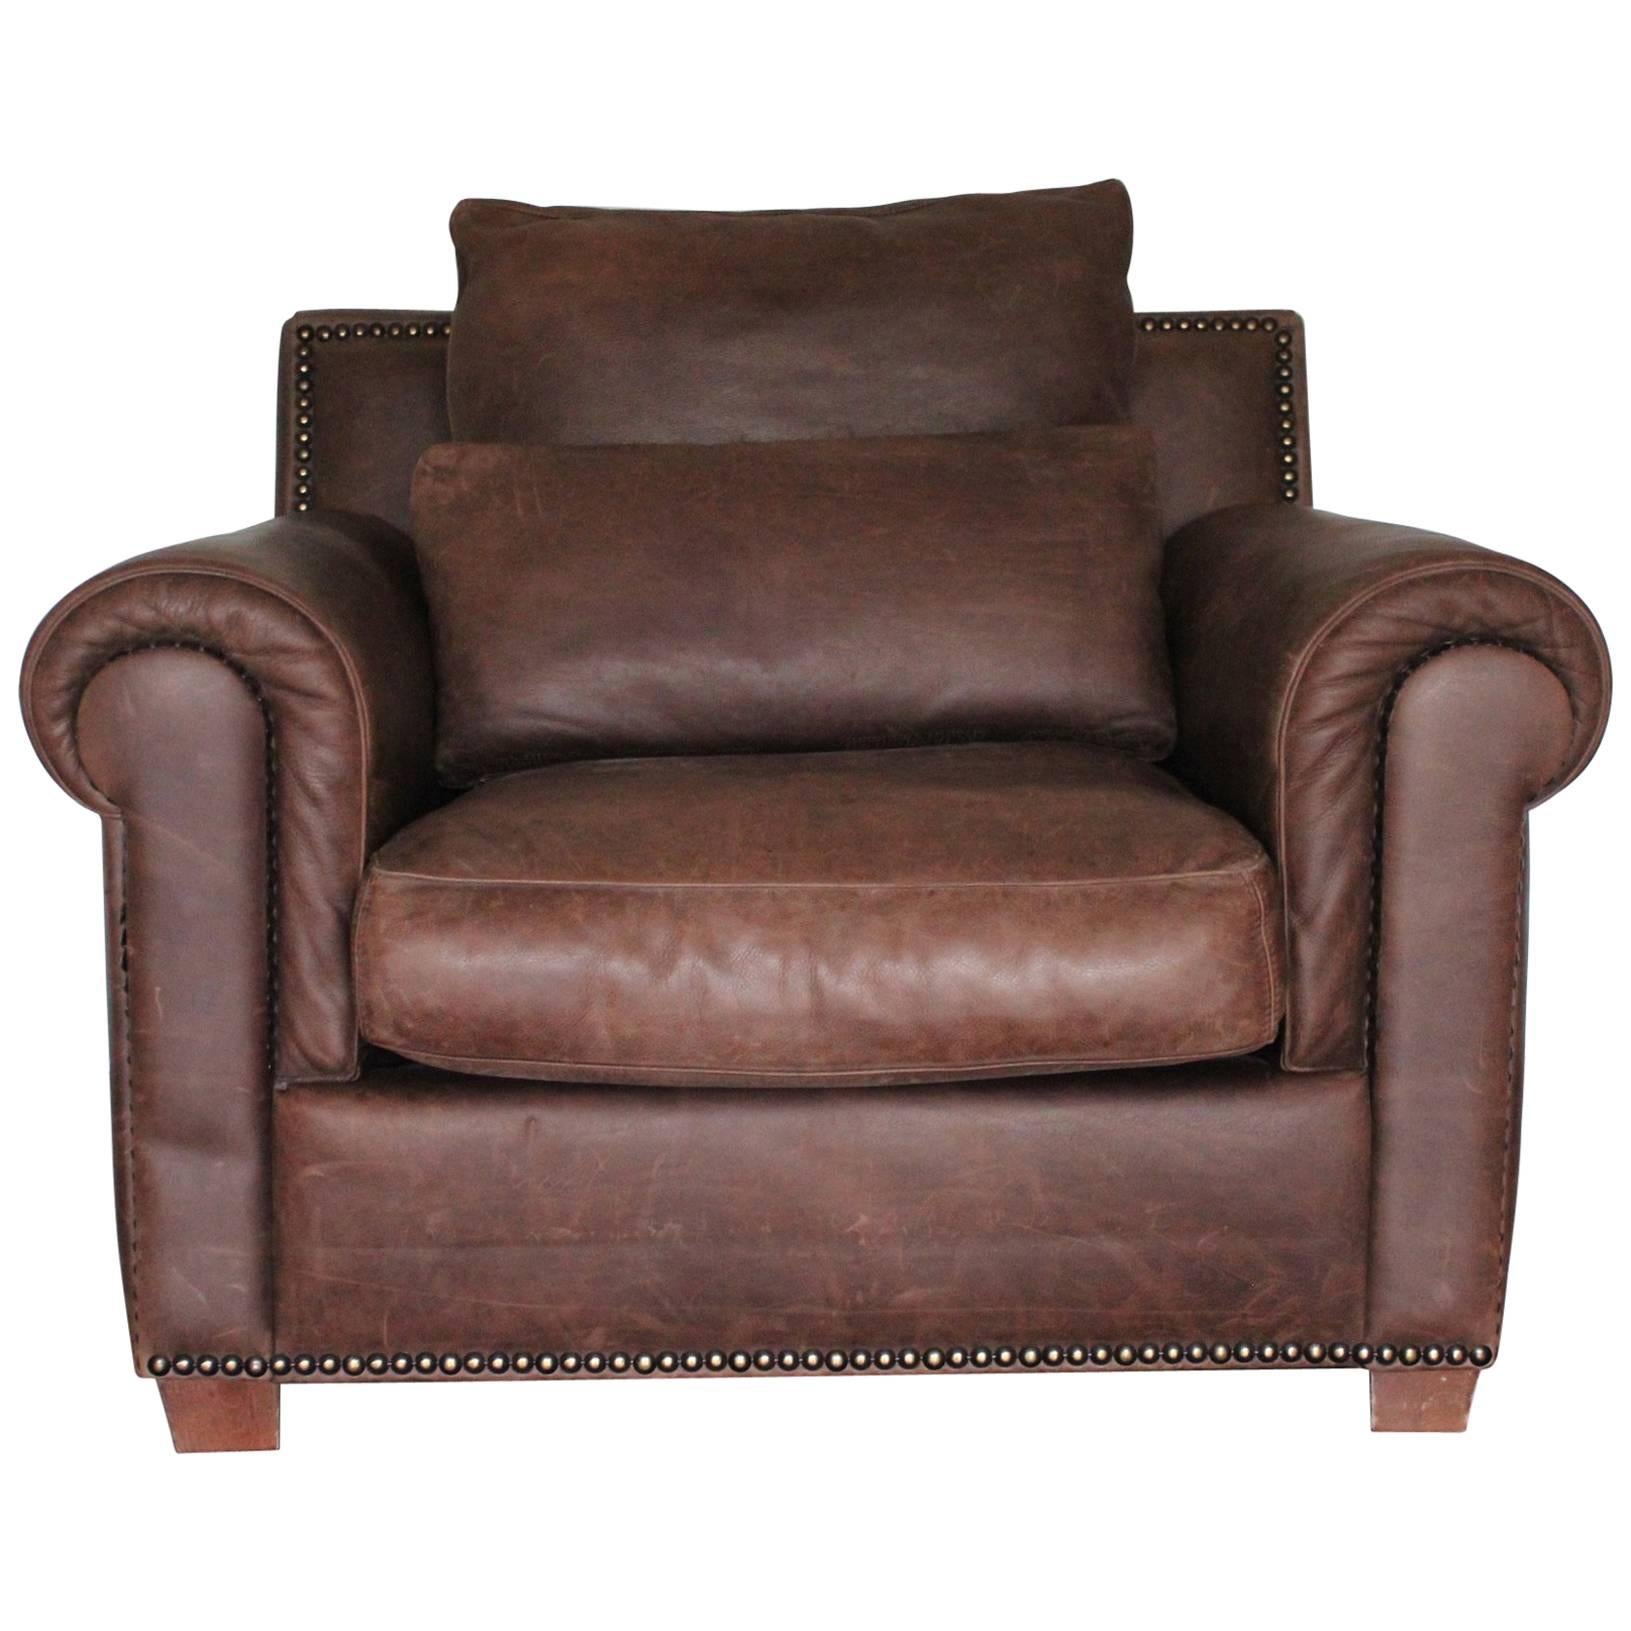 Fendi Casa "Club" Armchair in Vintage Mid-Brown Leather